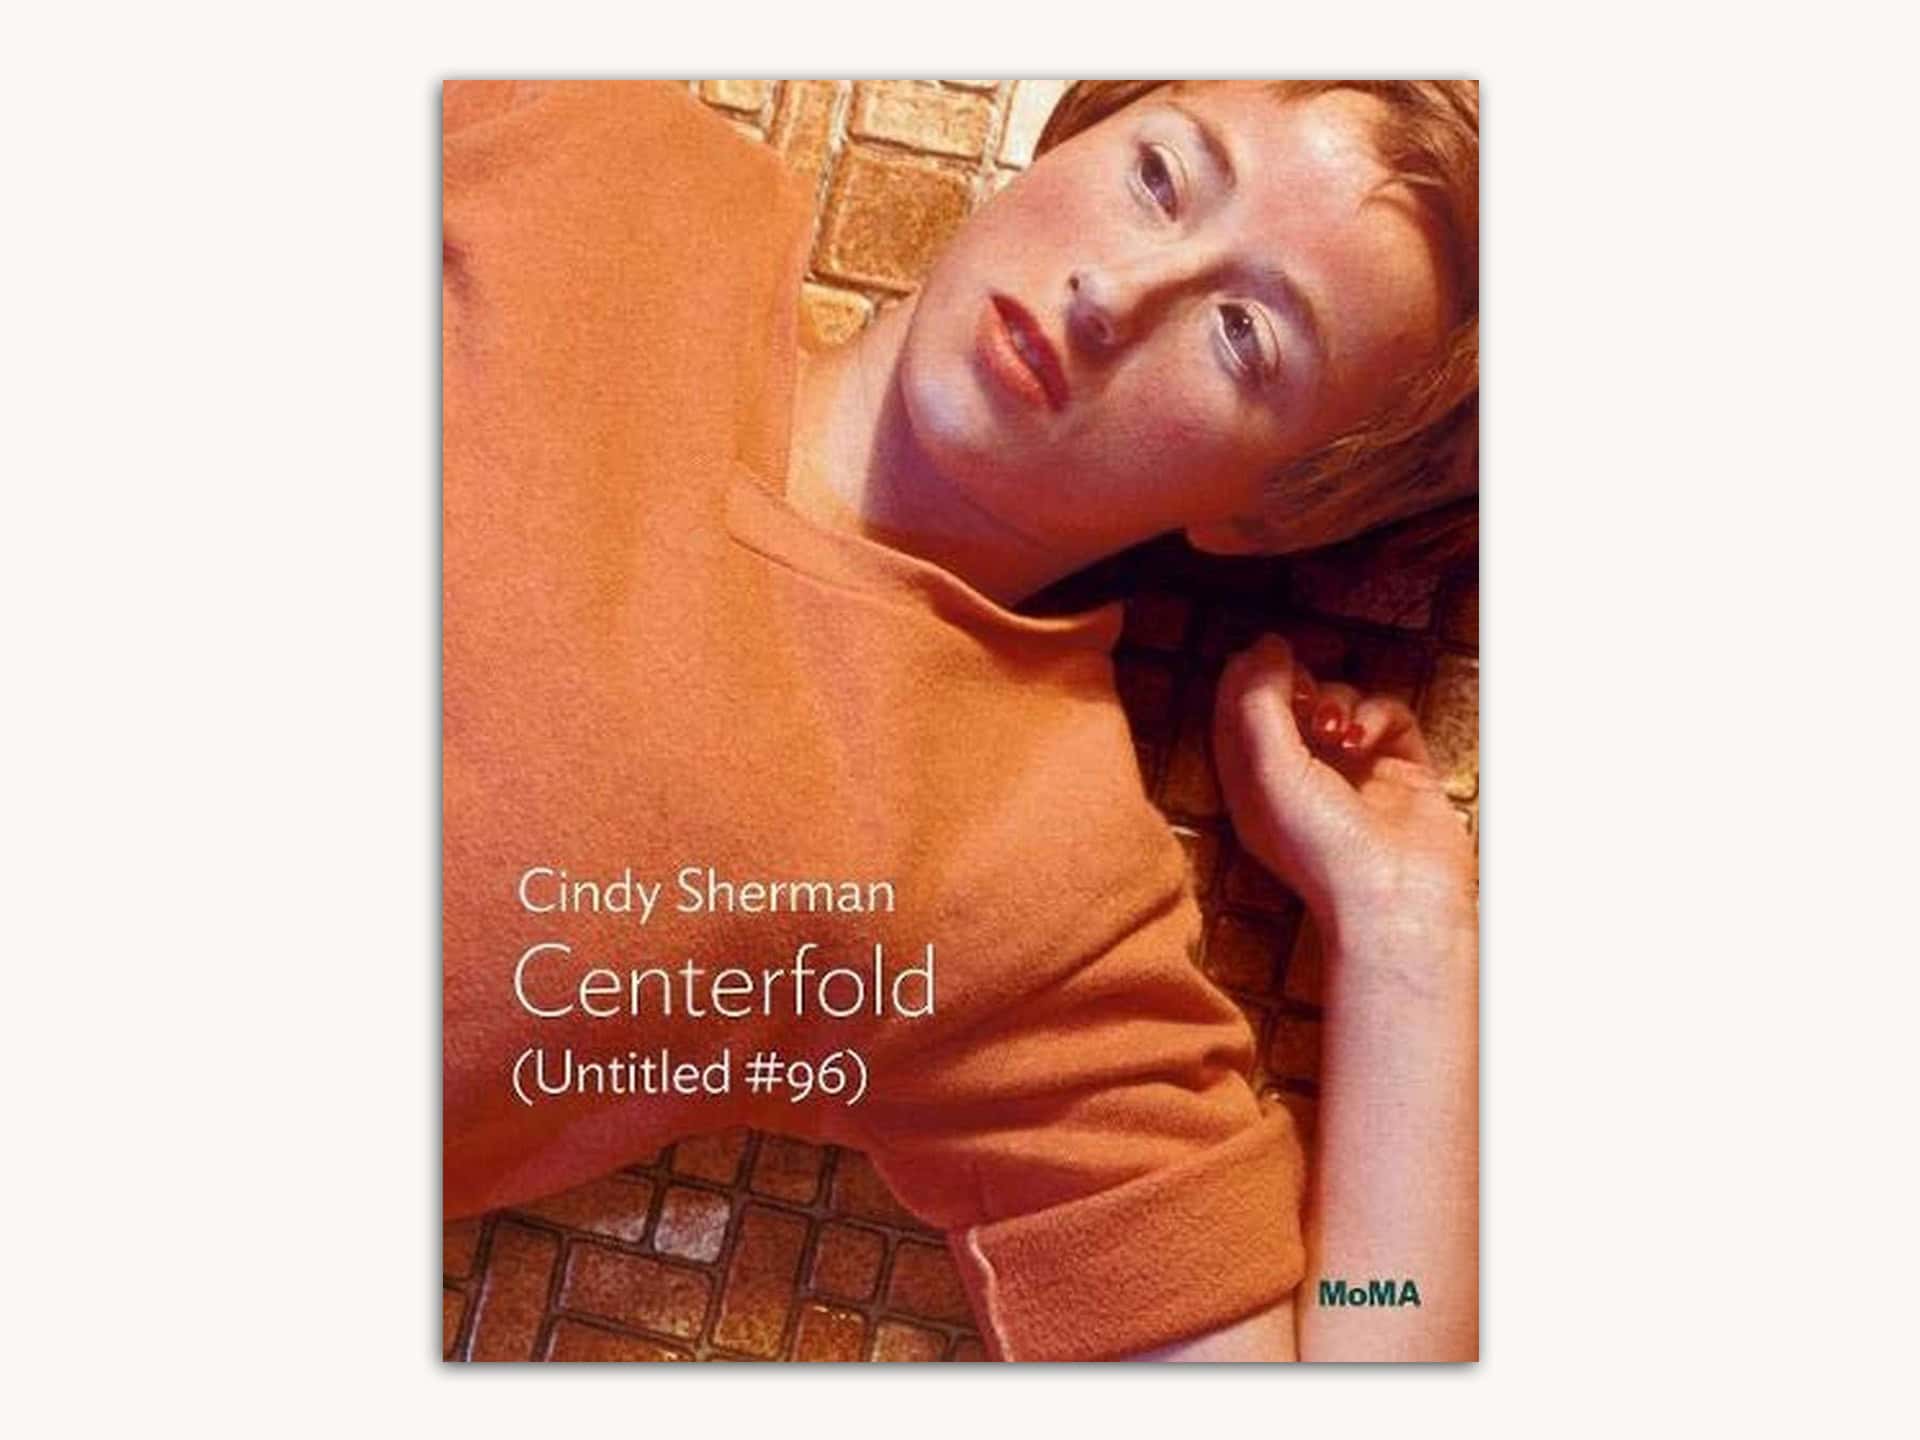 Cindy Sherman: Centerfold (Untitled #96) – English Edition